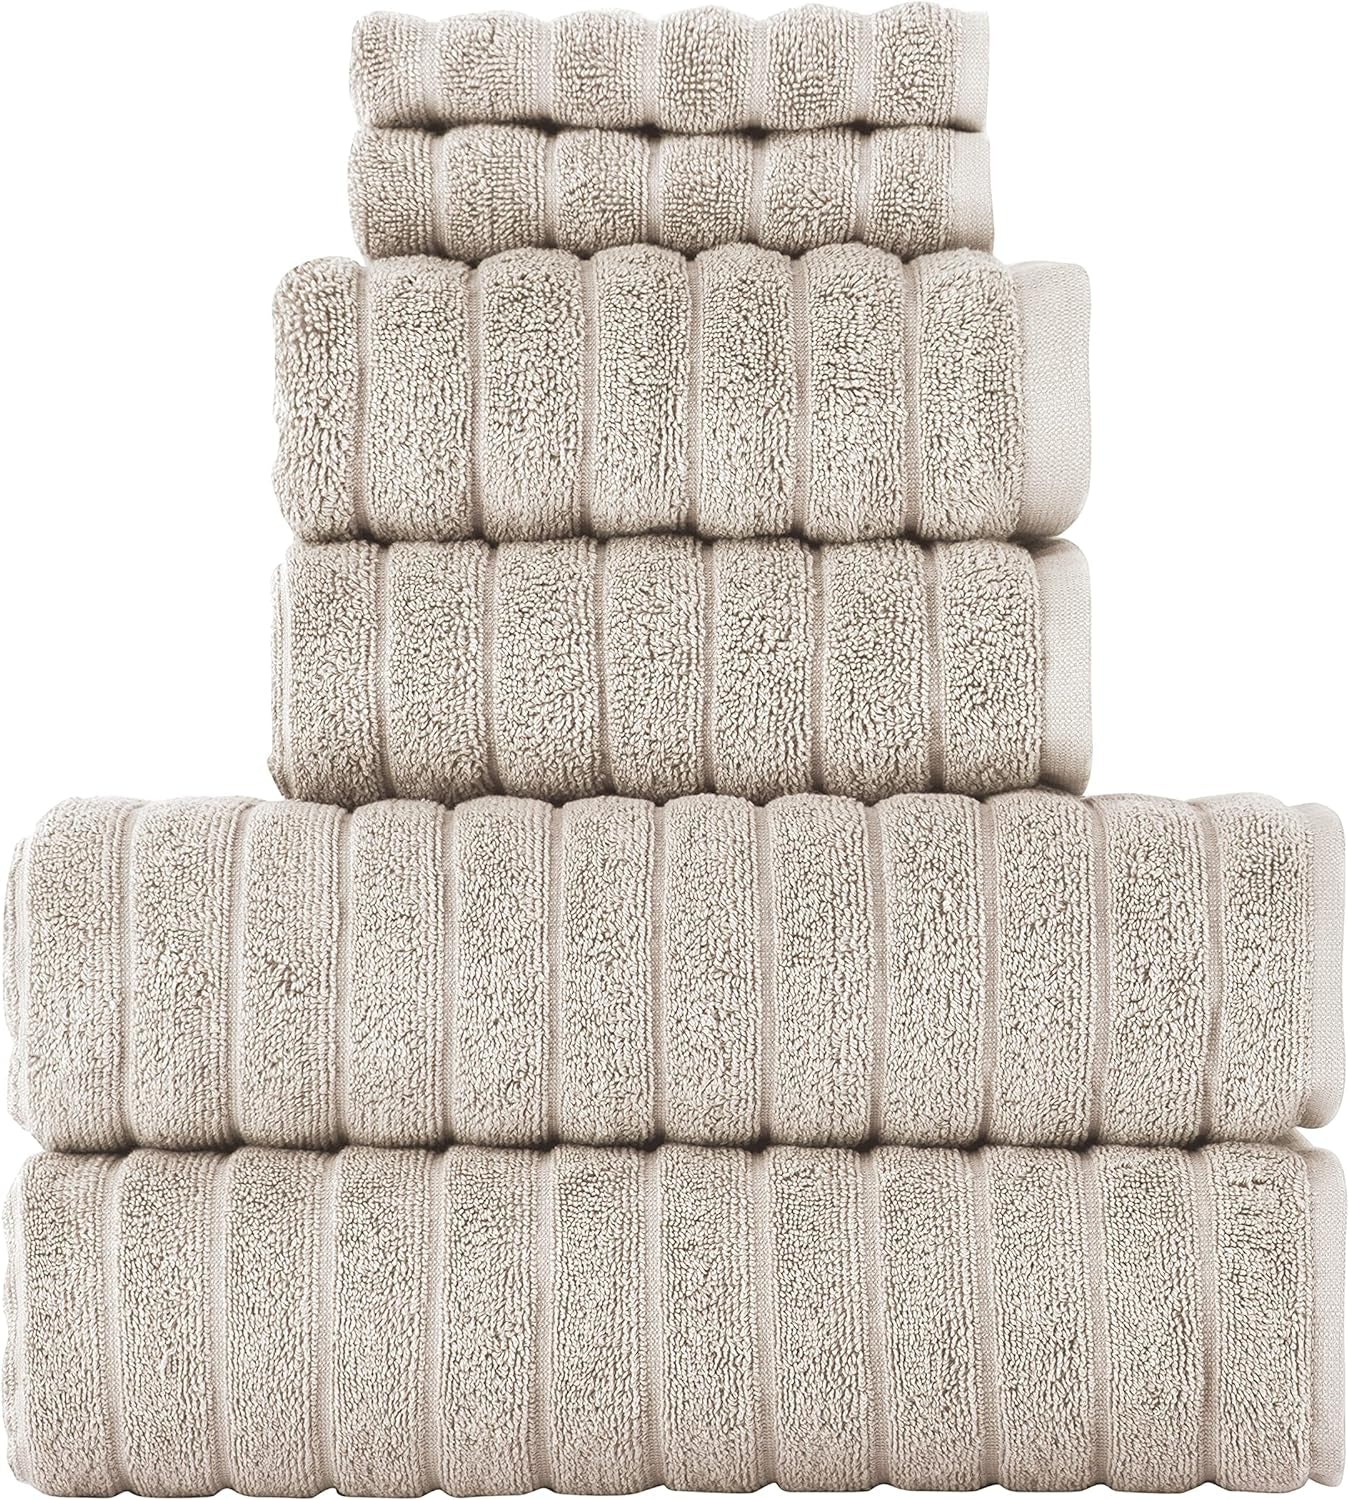 Luxury 6 Piece Towel Set - 2 Bath Towels, 2 Hand Towels, 2 Washcloths, Jacquard Ribbed, Absorbent, 100% Turkish Cotton (Almond Beige)